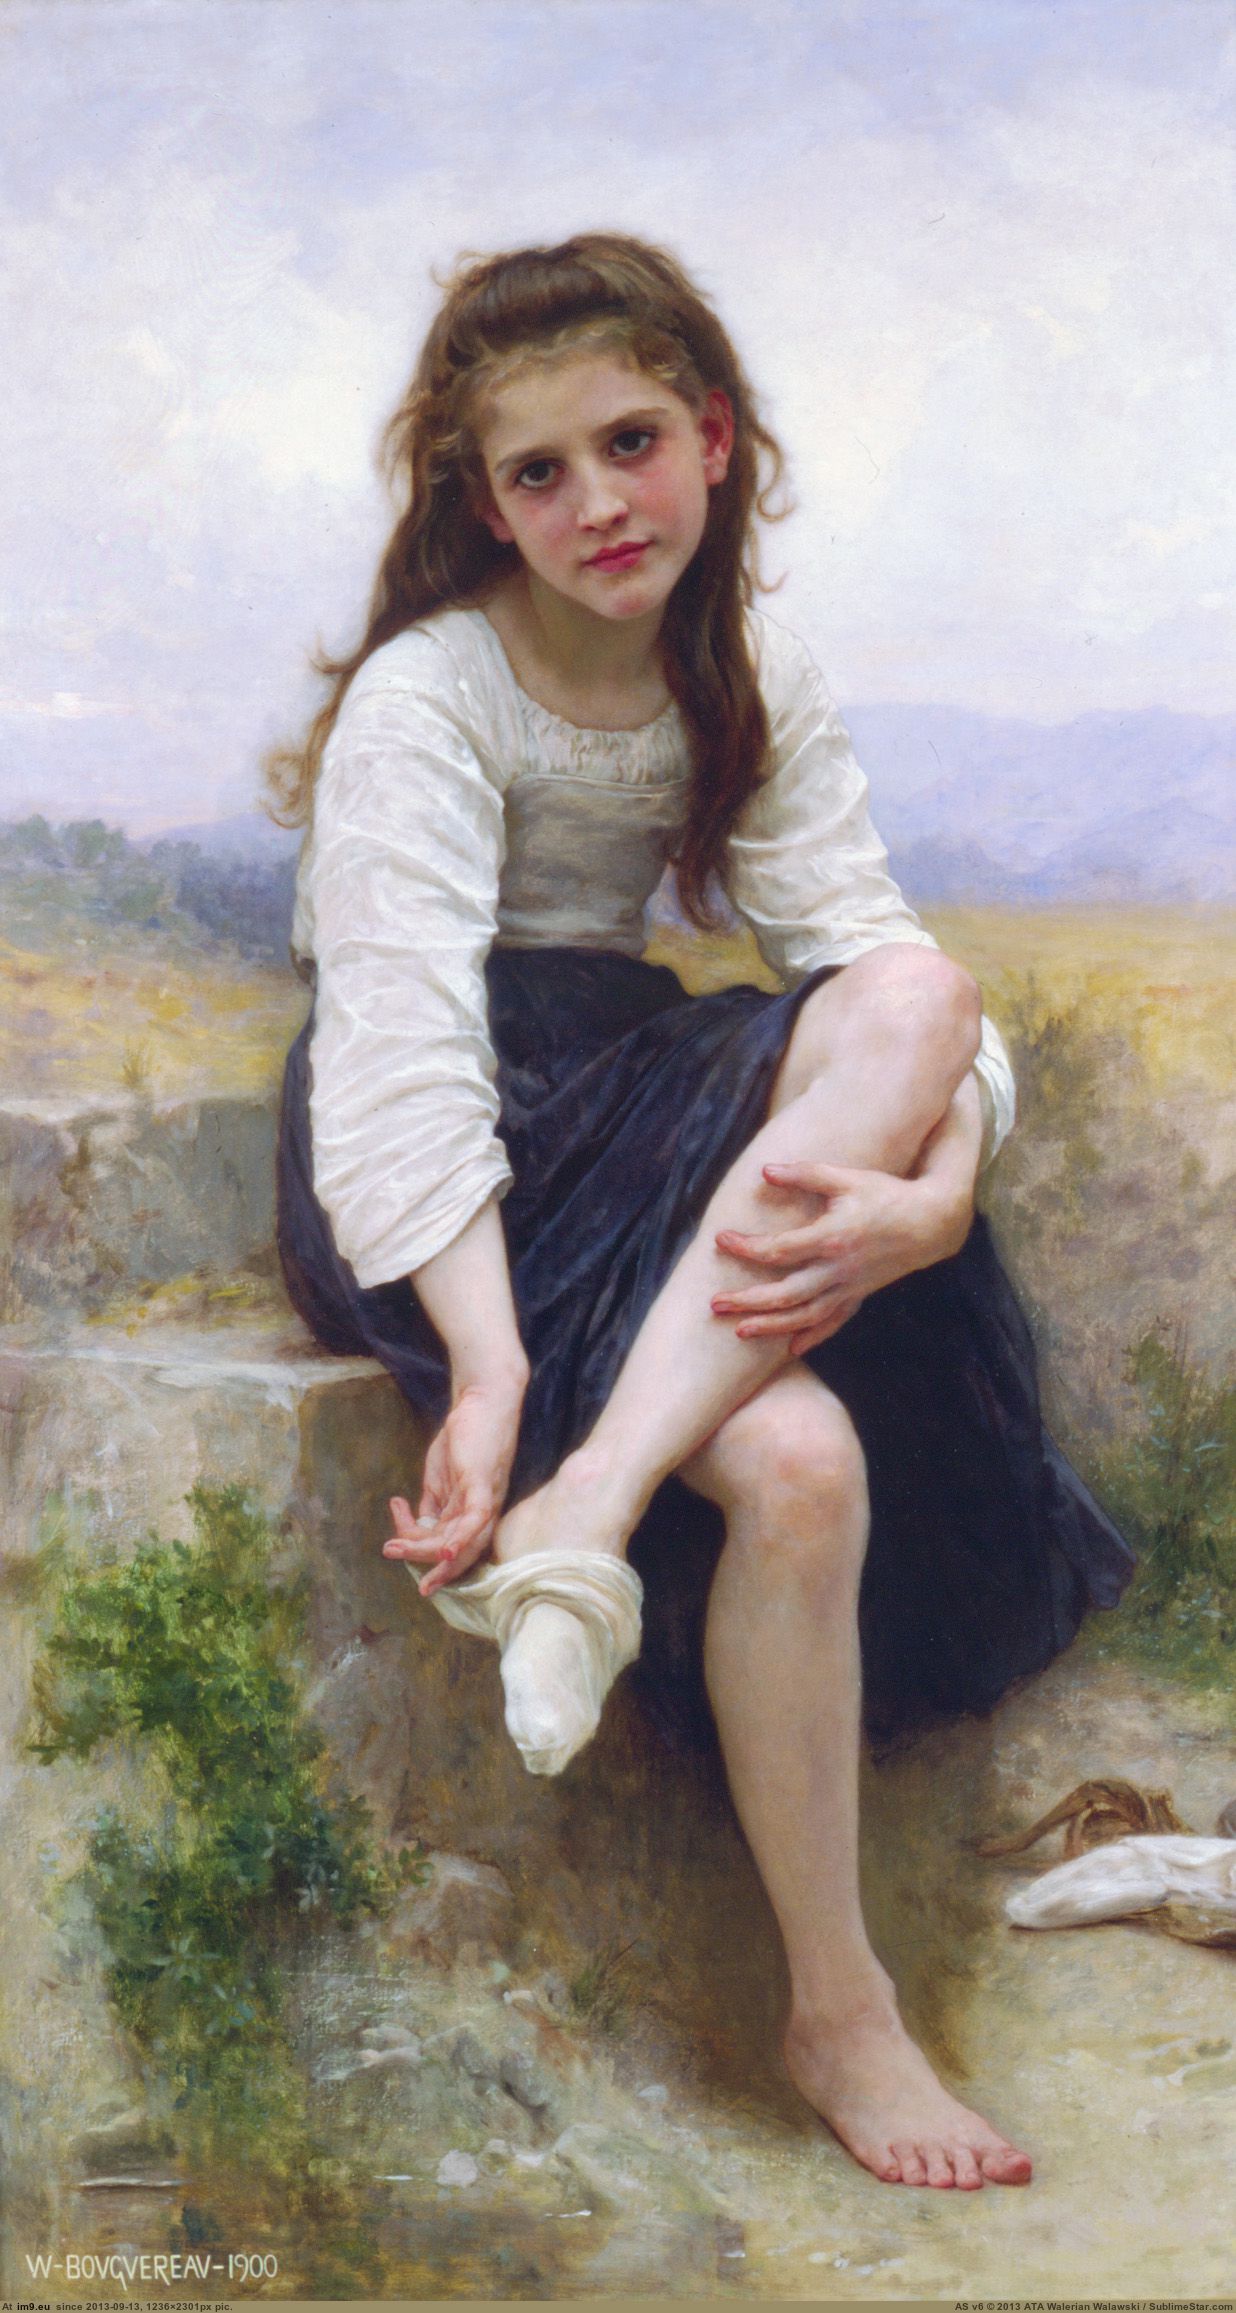 (1900) Avant Le Bain - William Adolphe Bouguereau (in William Adolphe Bouguereau paintings (1825-1905))